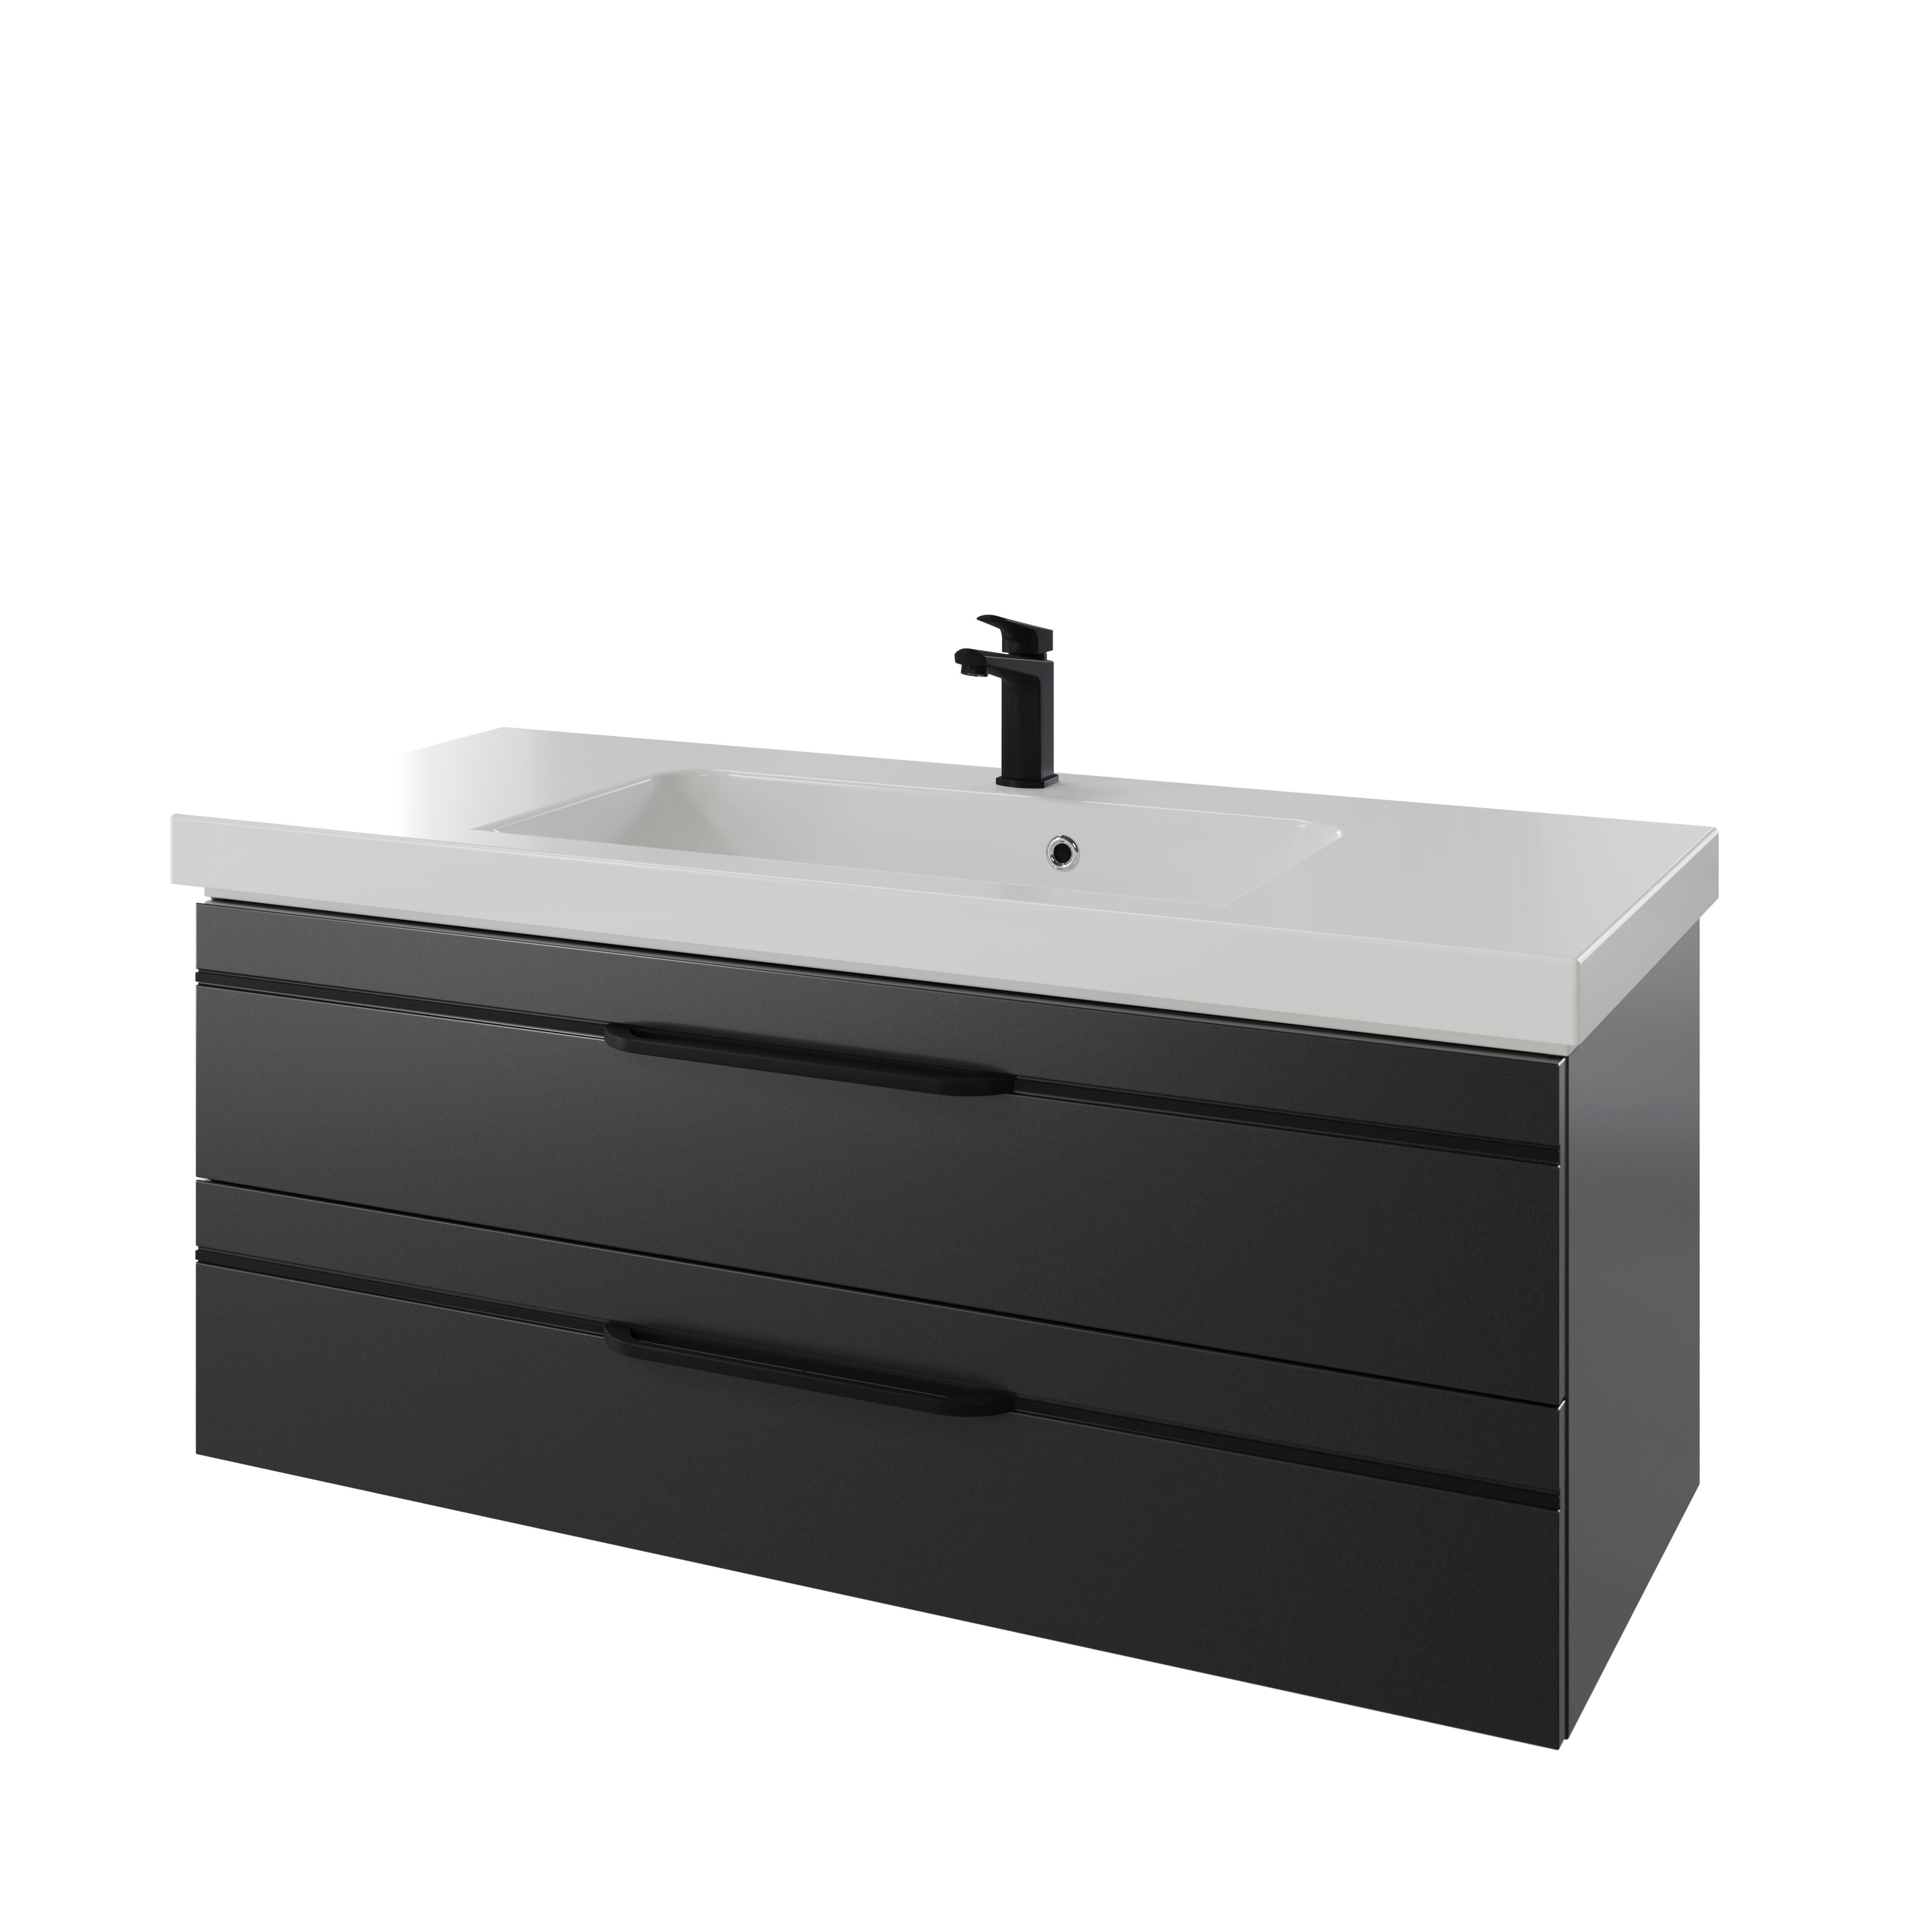 Mueble de baño con lavabo balto antracita 120x49 cm